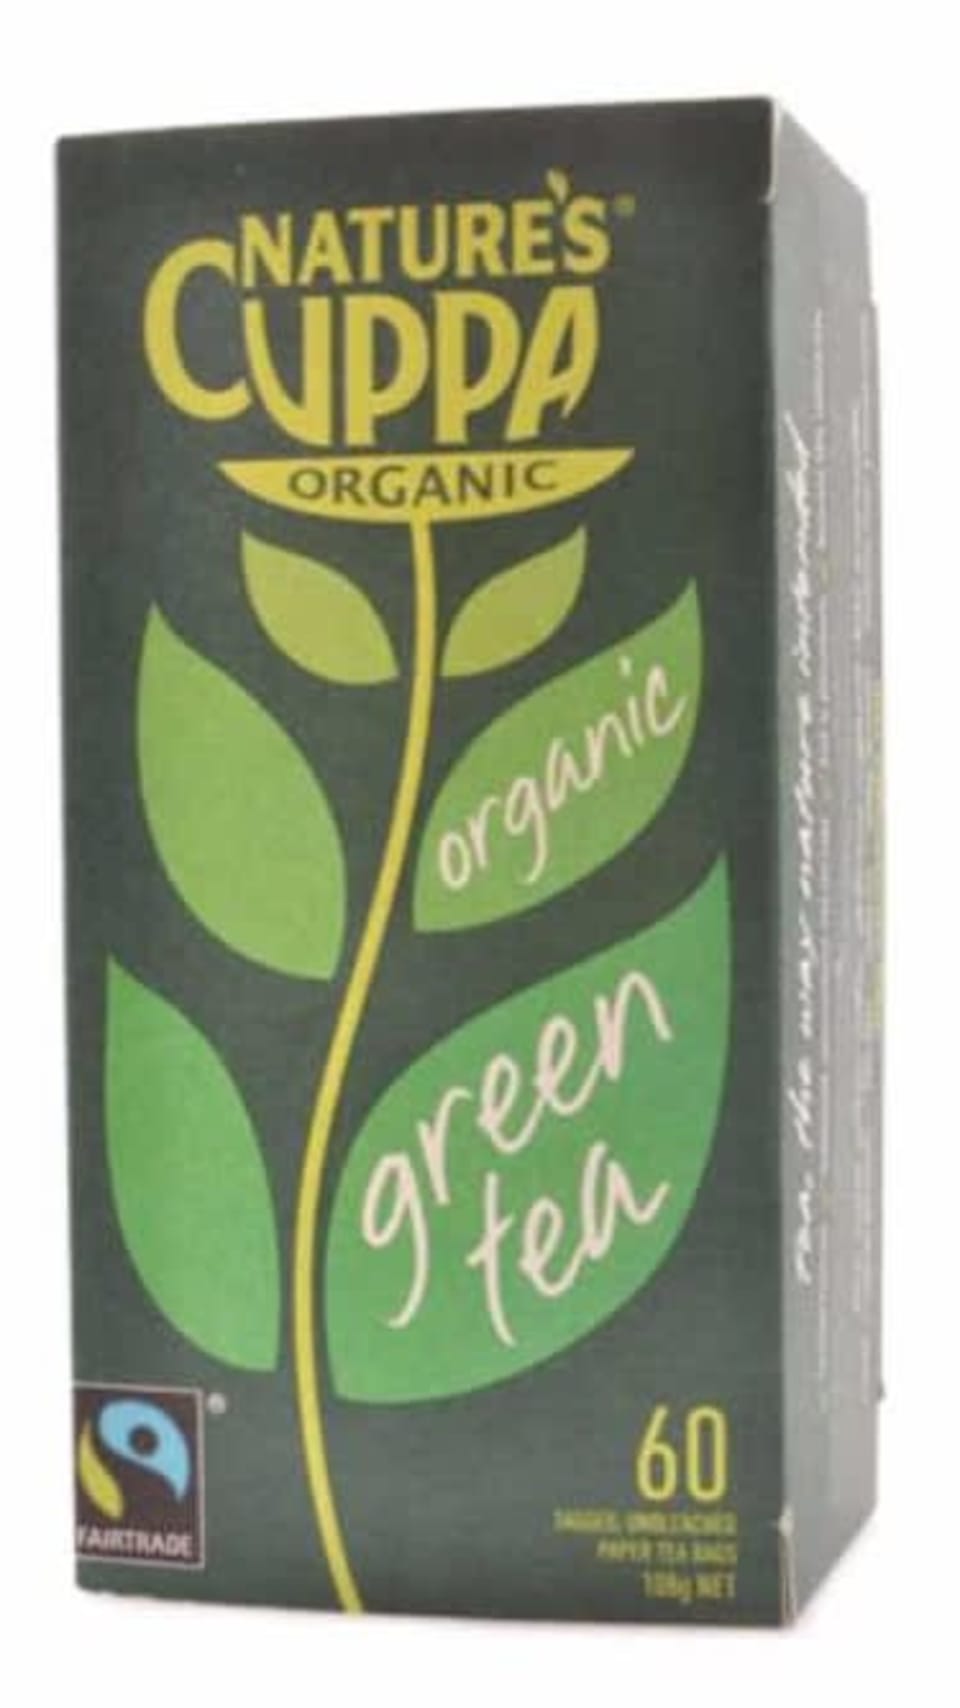 NATURE'S Cuppa Organic Green Tea Harga & Review / Ulasan ...